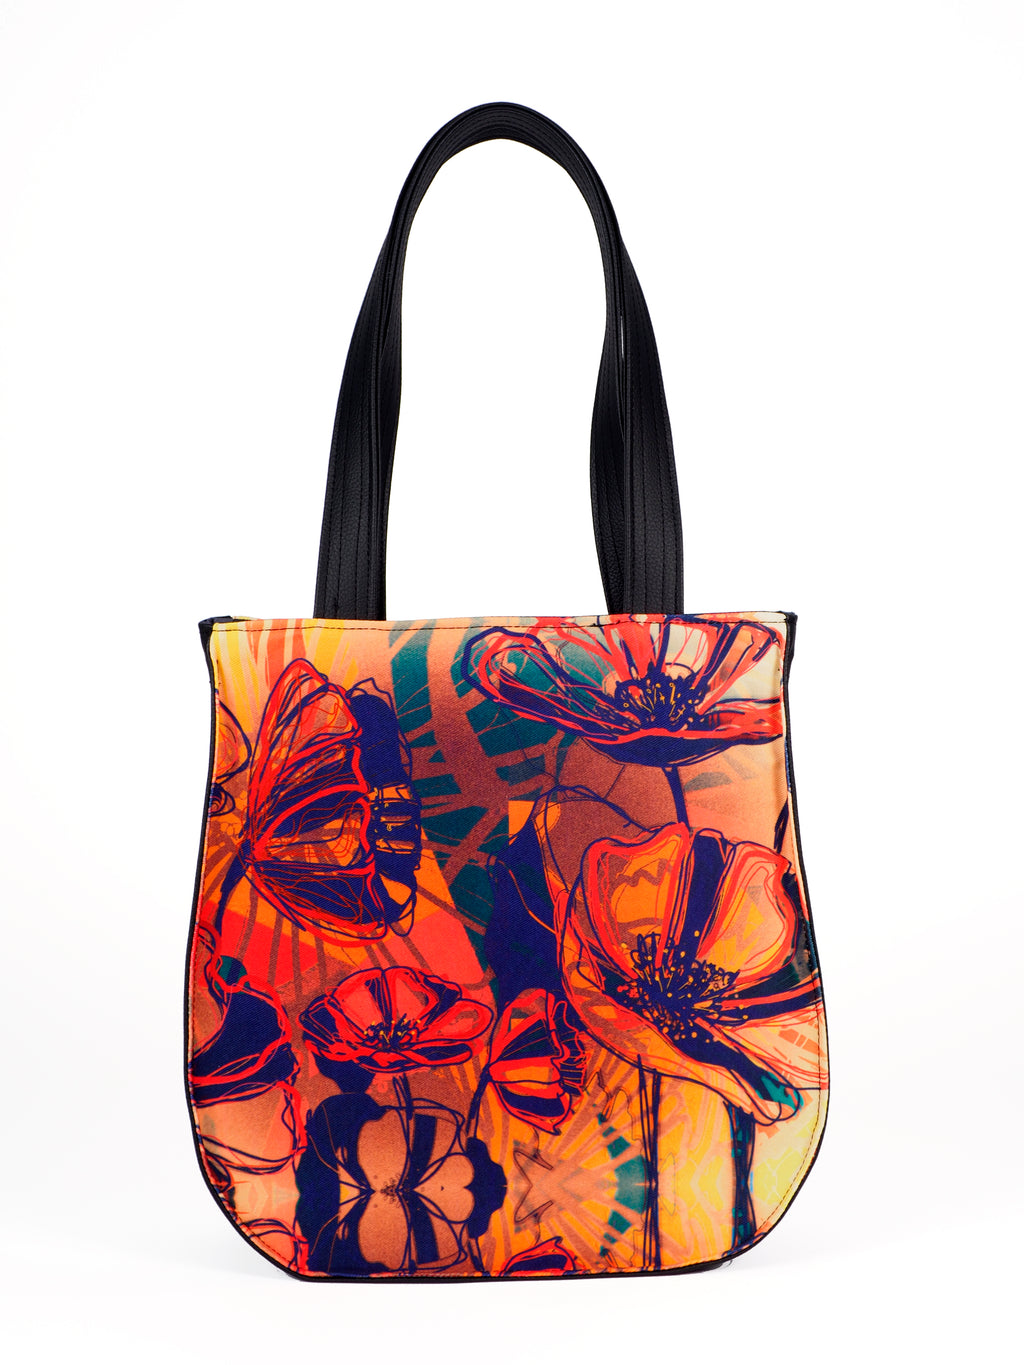 Bardo style bag - Poppy - Premium style bag from BARDO ART WORKS - Just lvbeige, green, leaves, pink, red, Rosily, summer69.00! Shop now at BARDO ART WORKS